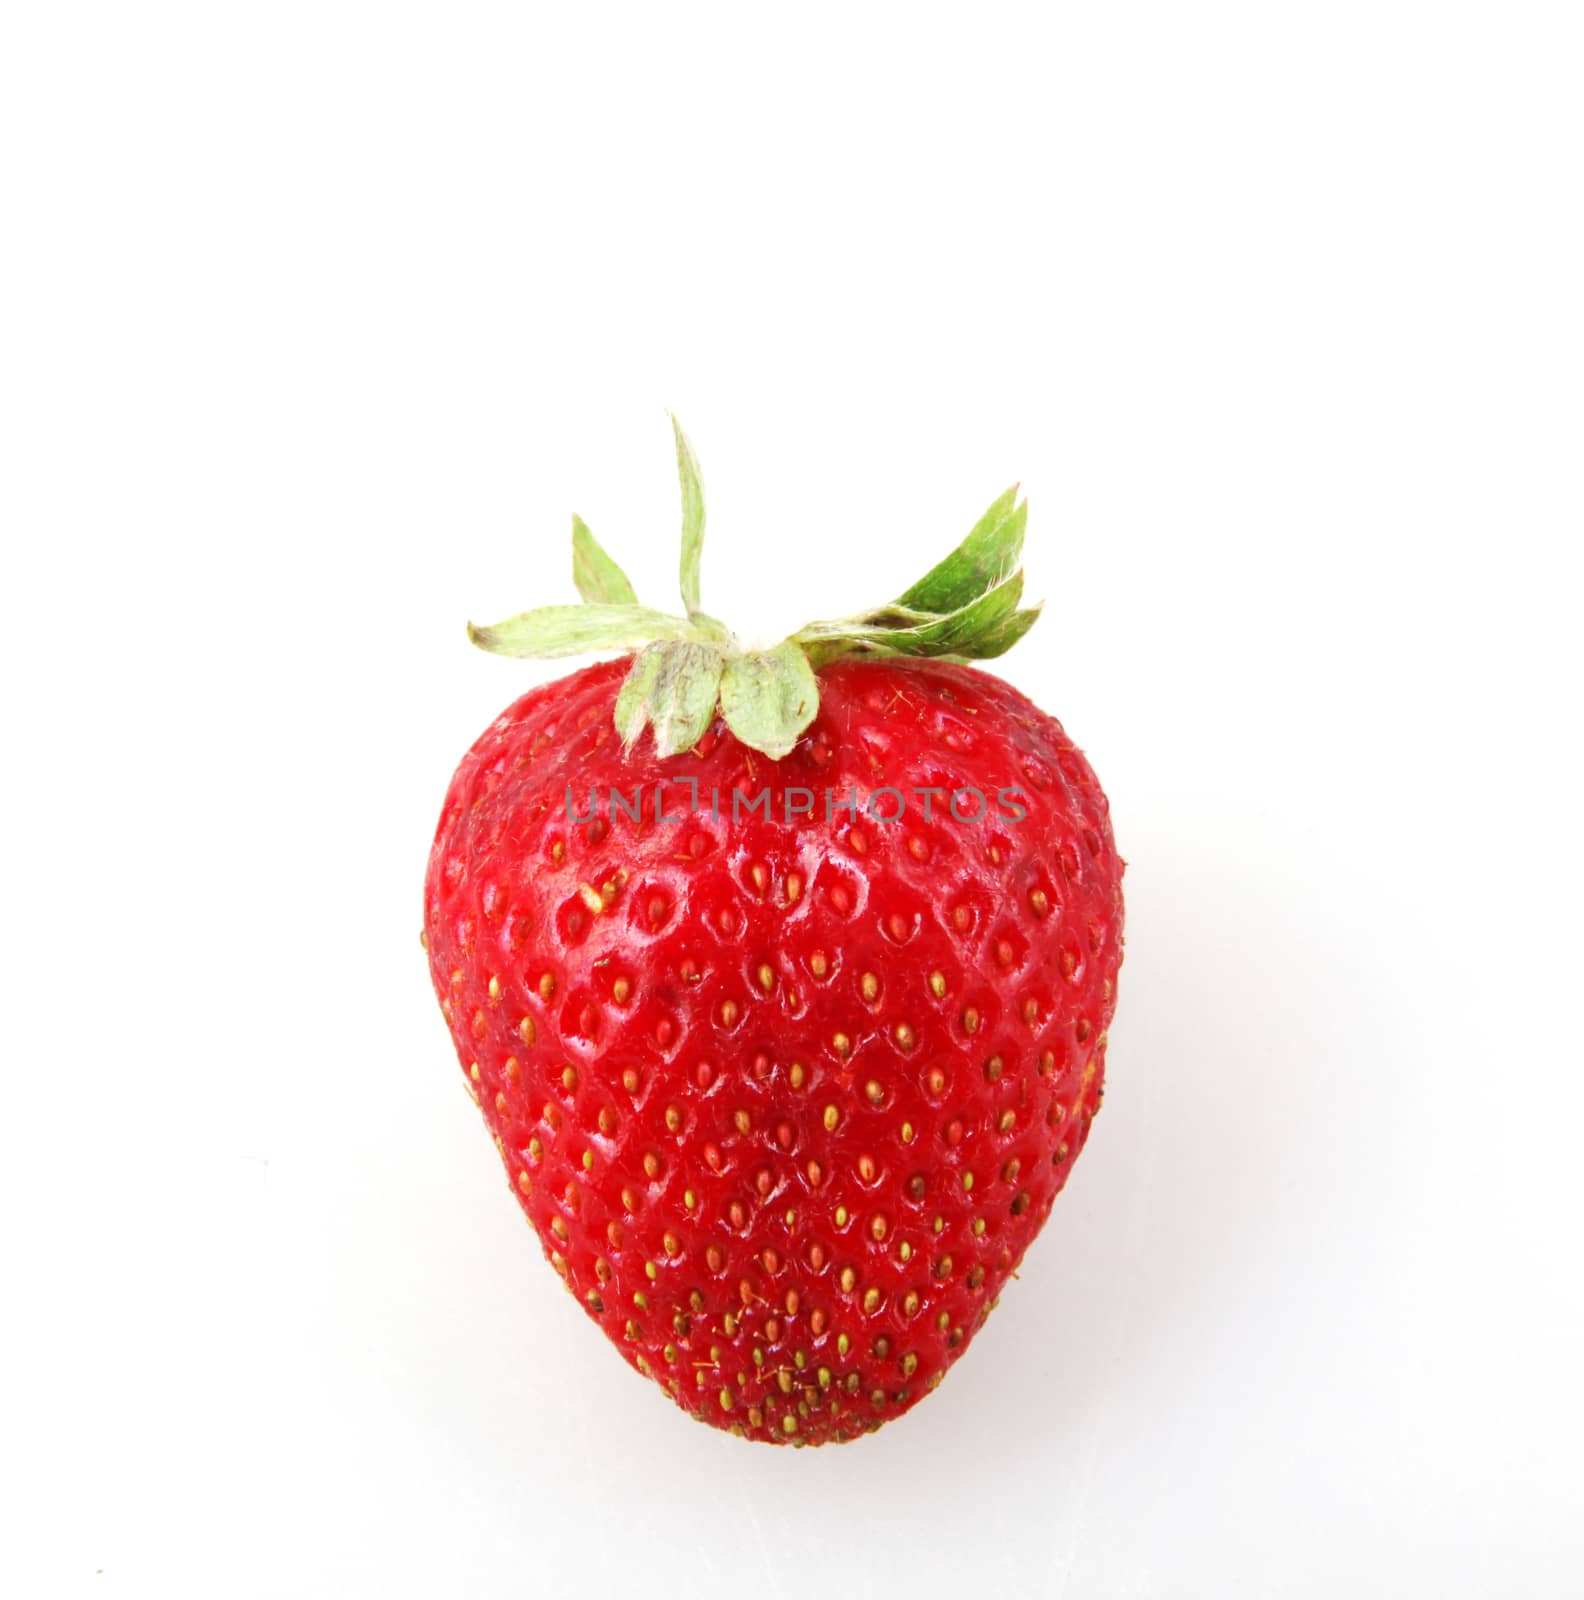 Garden Strawberry Against White Background by nenovbrothers